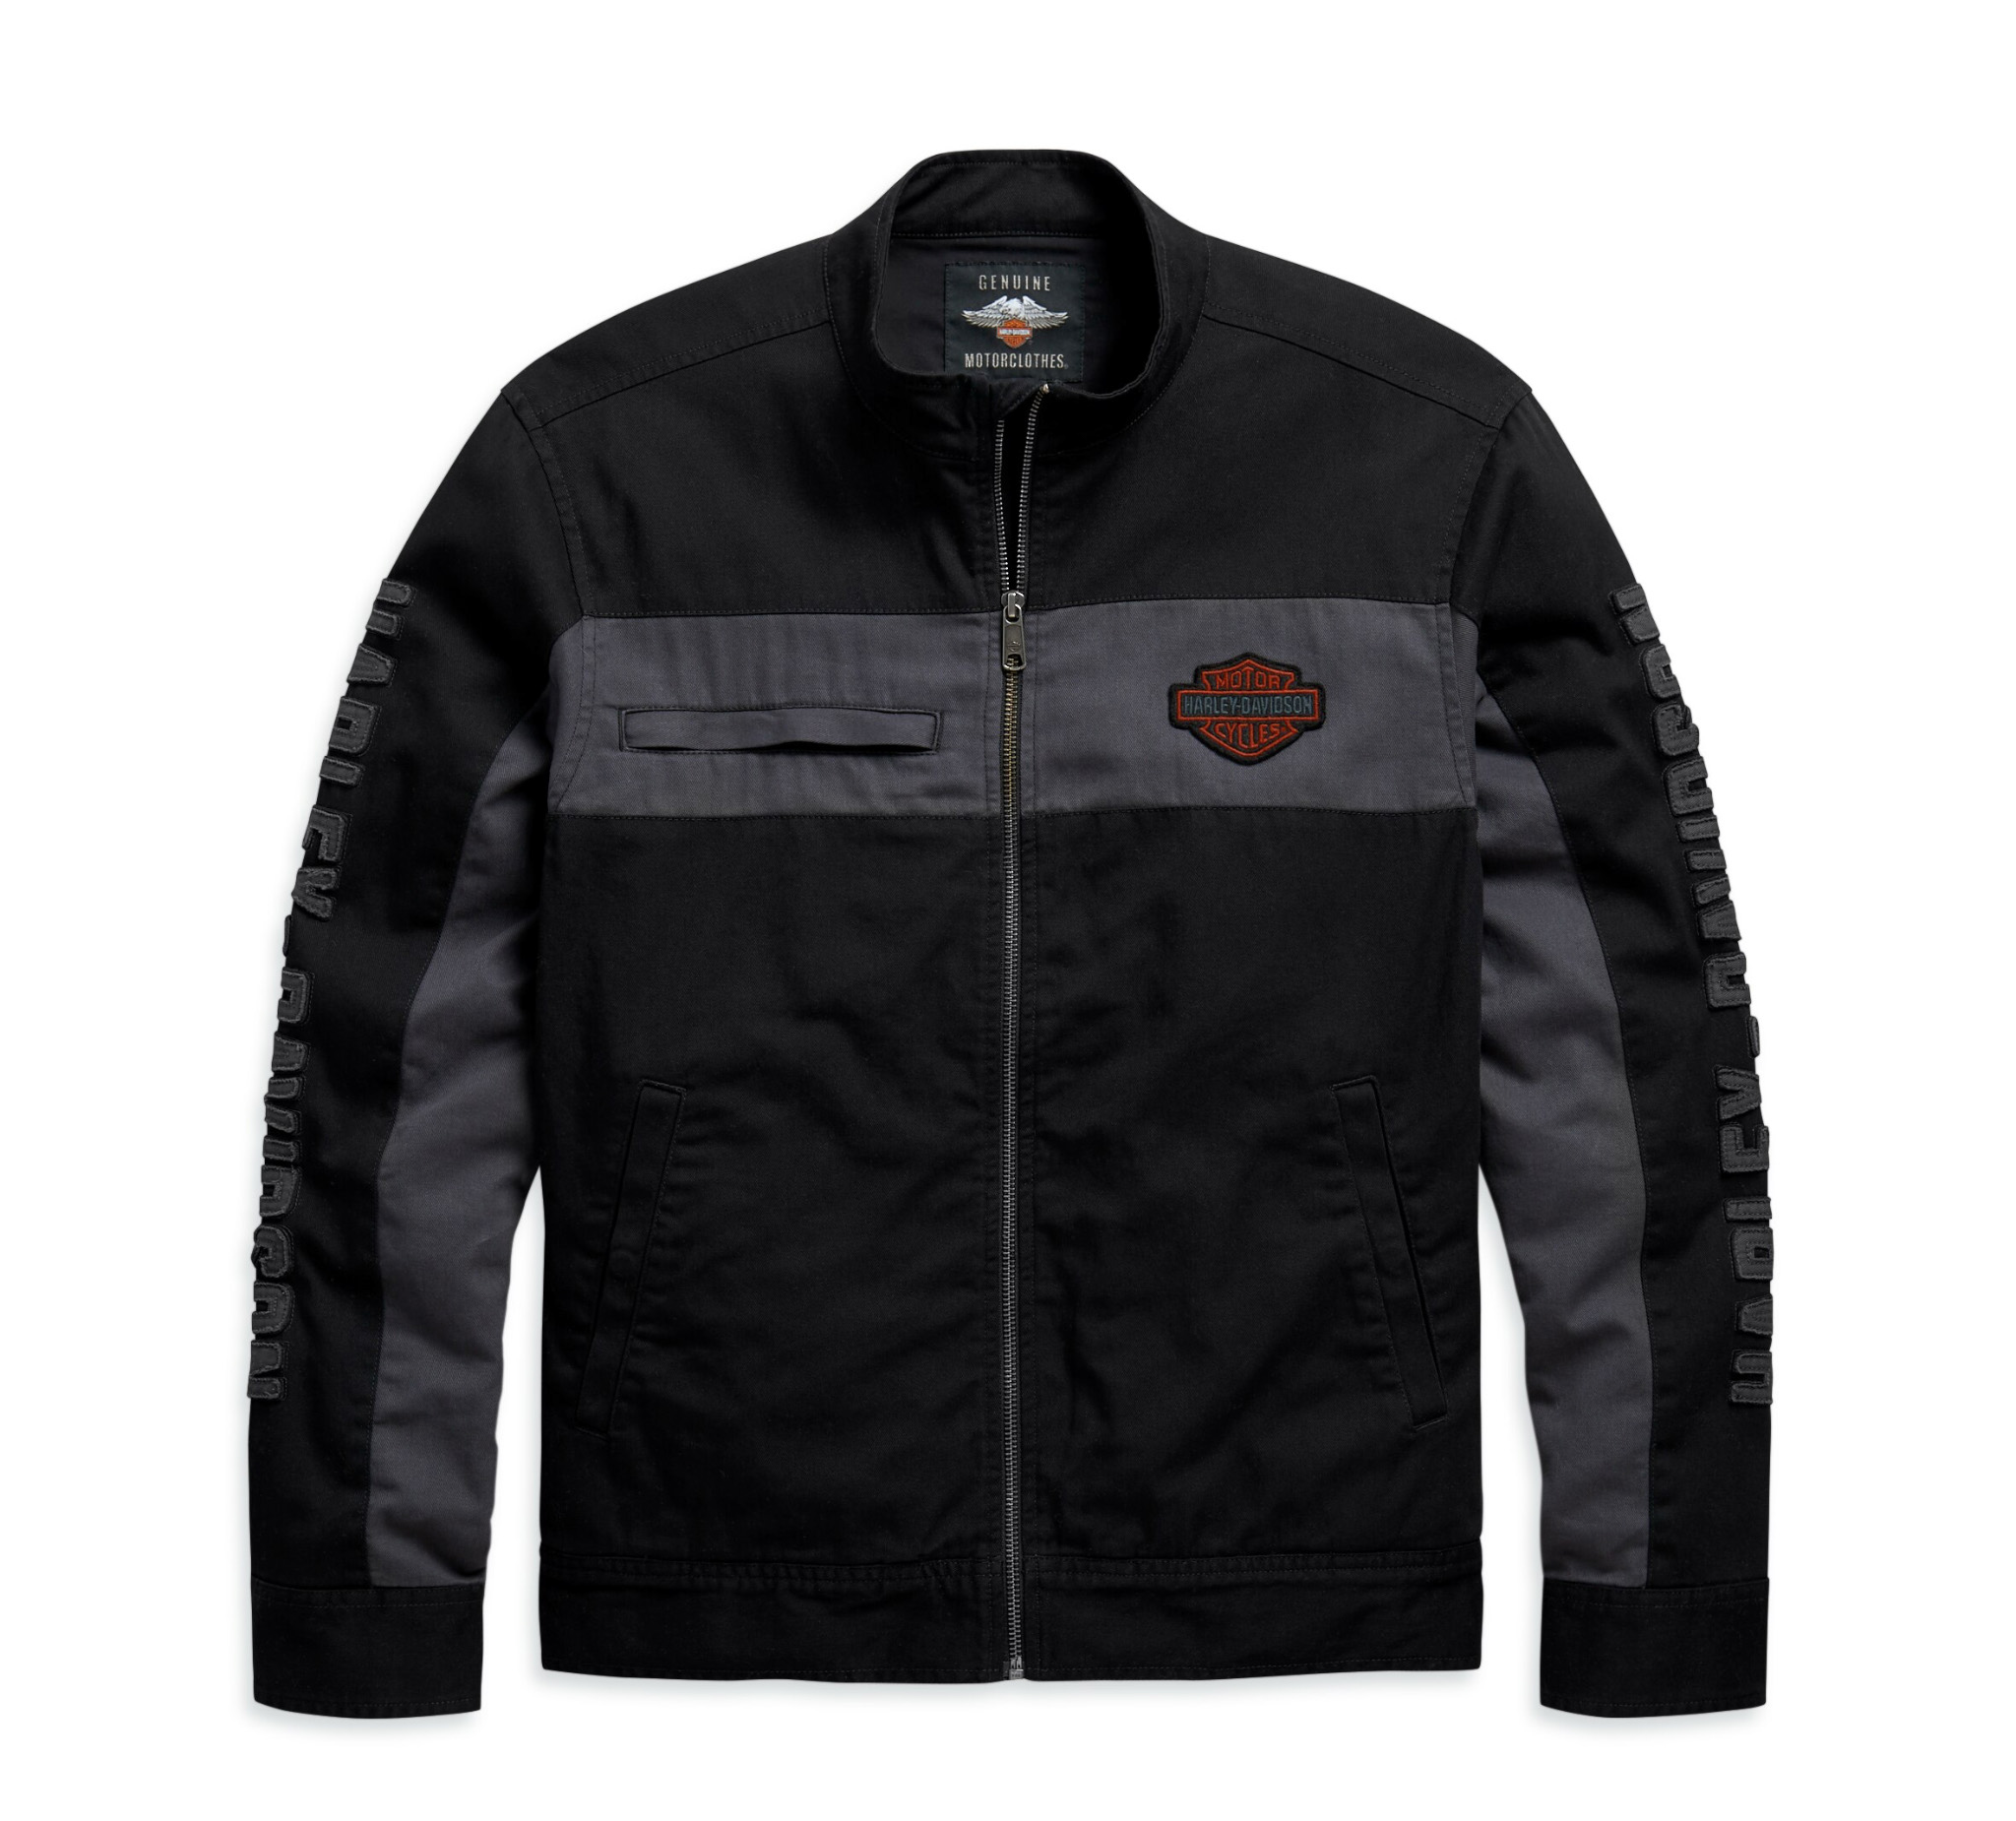 Harley Davidson Riding Jacket - Jackets & Coats